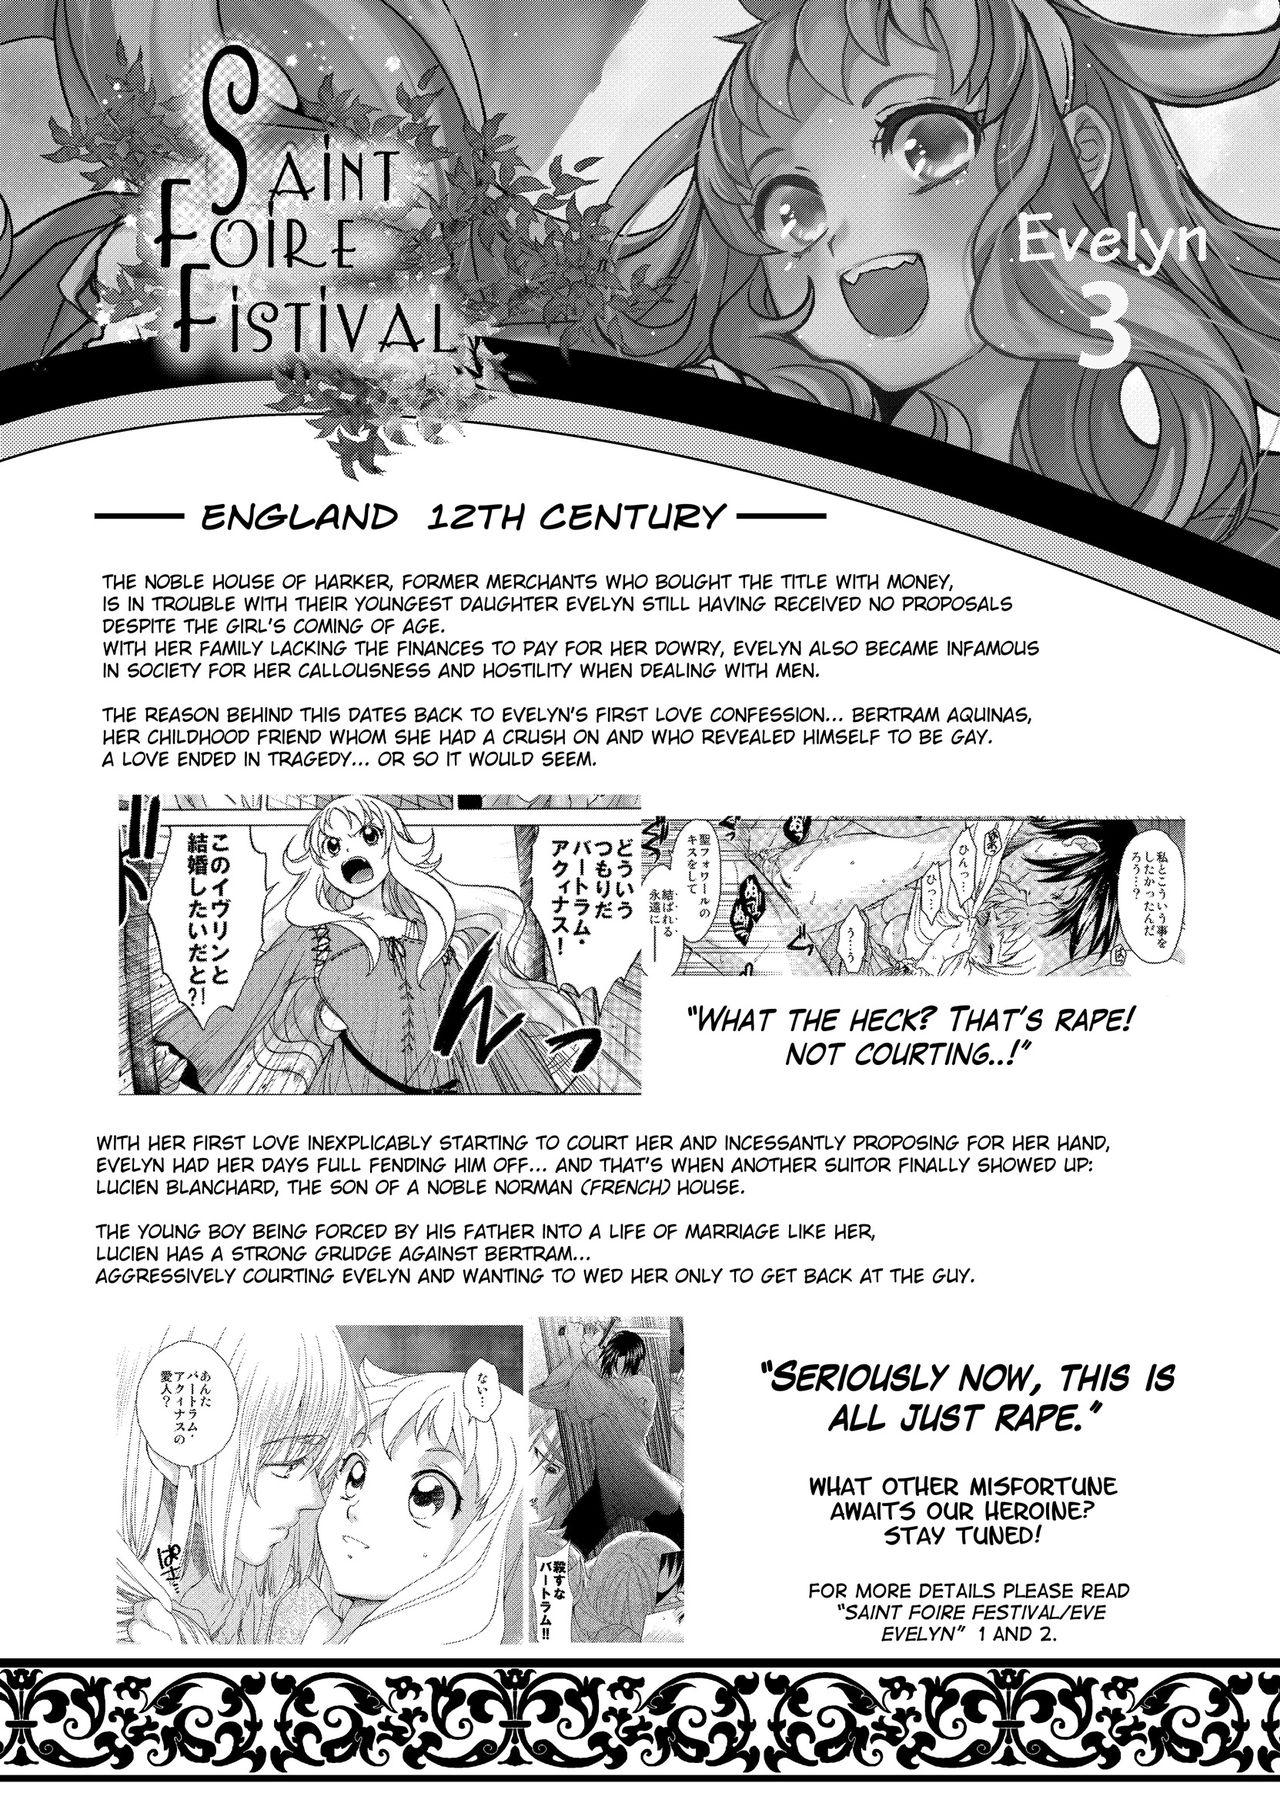 Por Saint Foire Festival/eve Evelyn:3 - Original Cum Eating - Page 4